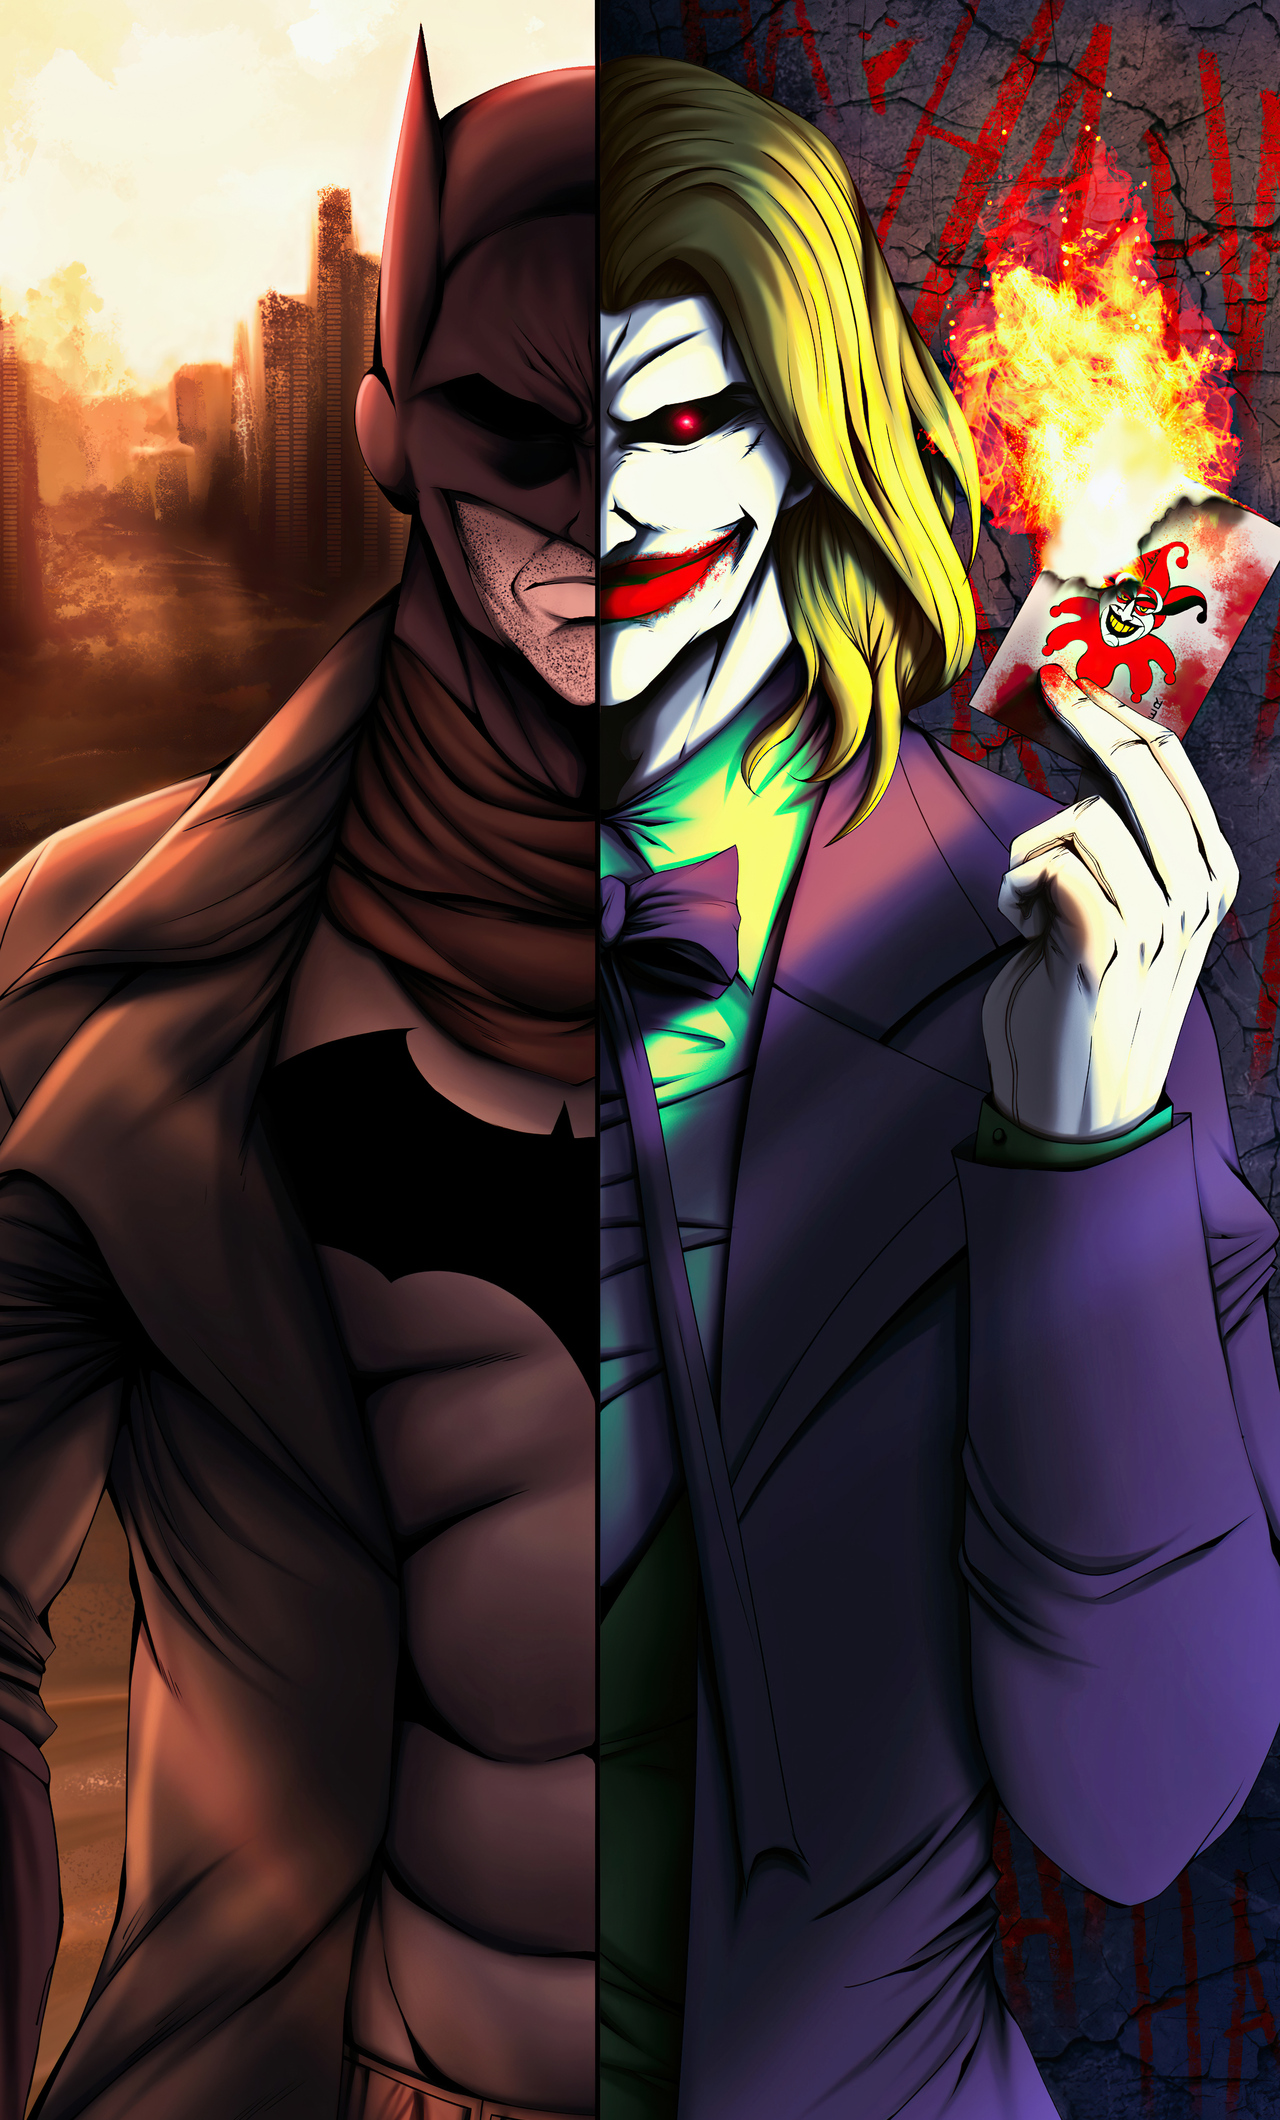 Batman vs Joker Wallpapers  Top Free Batman vs Joker Backgrounds   WallpaperAccess